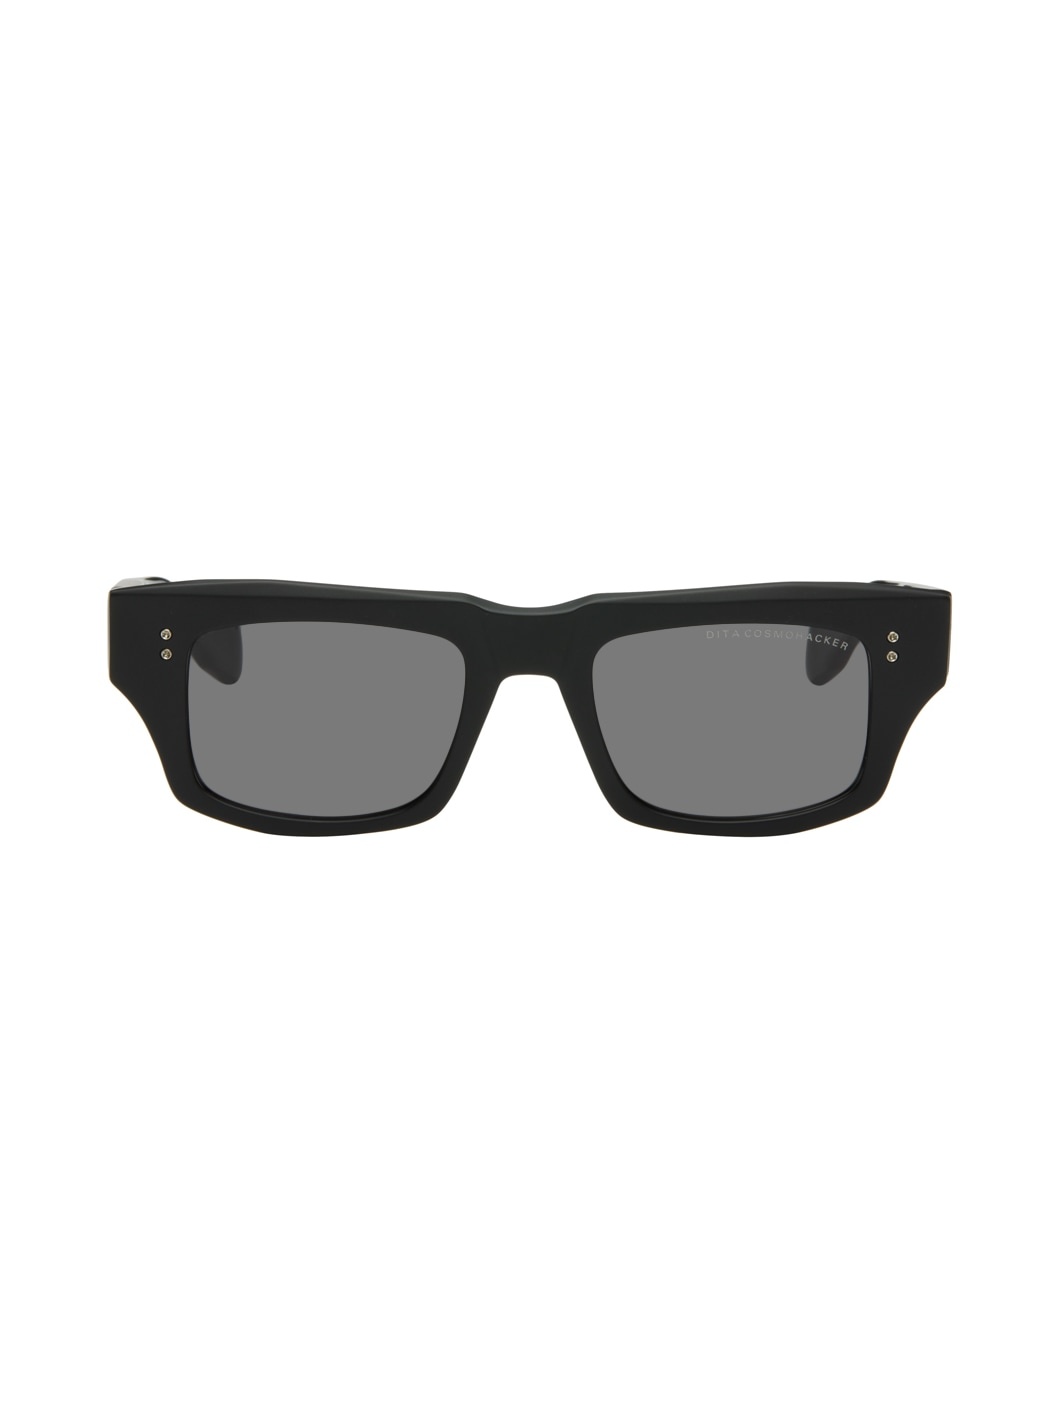 Black Cosmohacker Sunglasses - 1